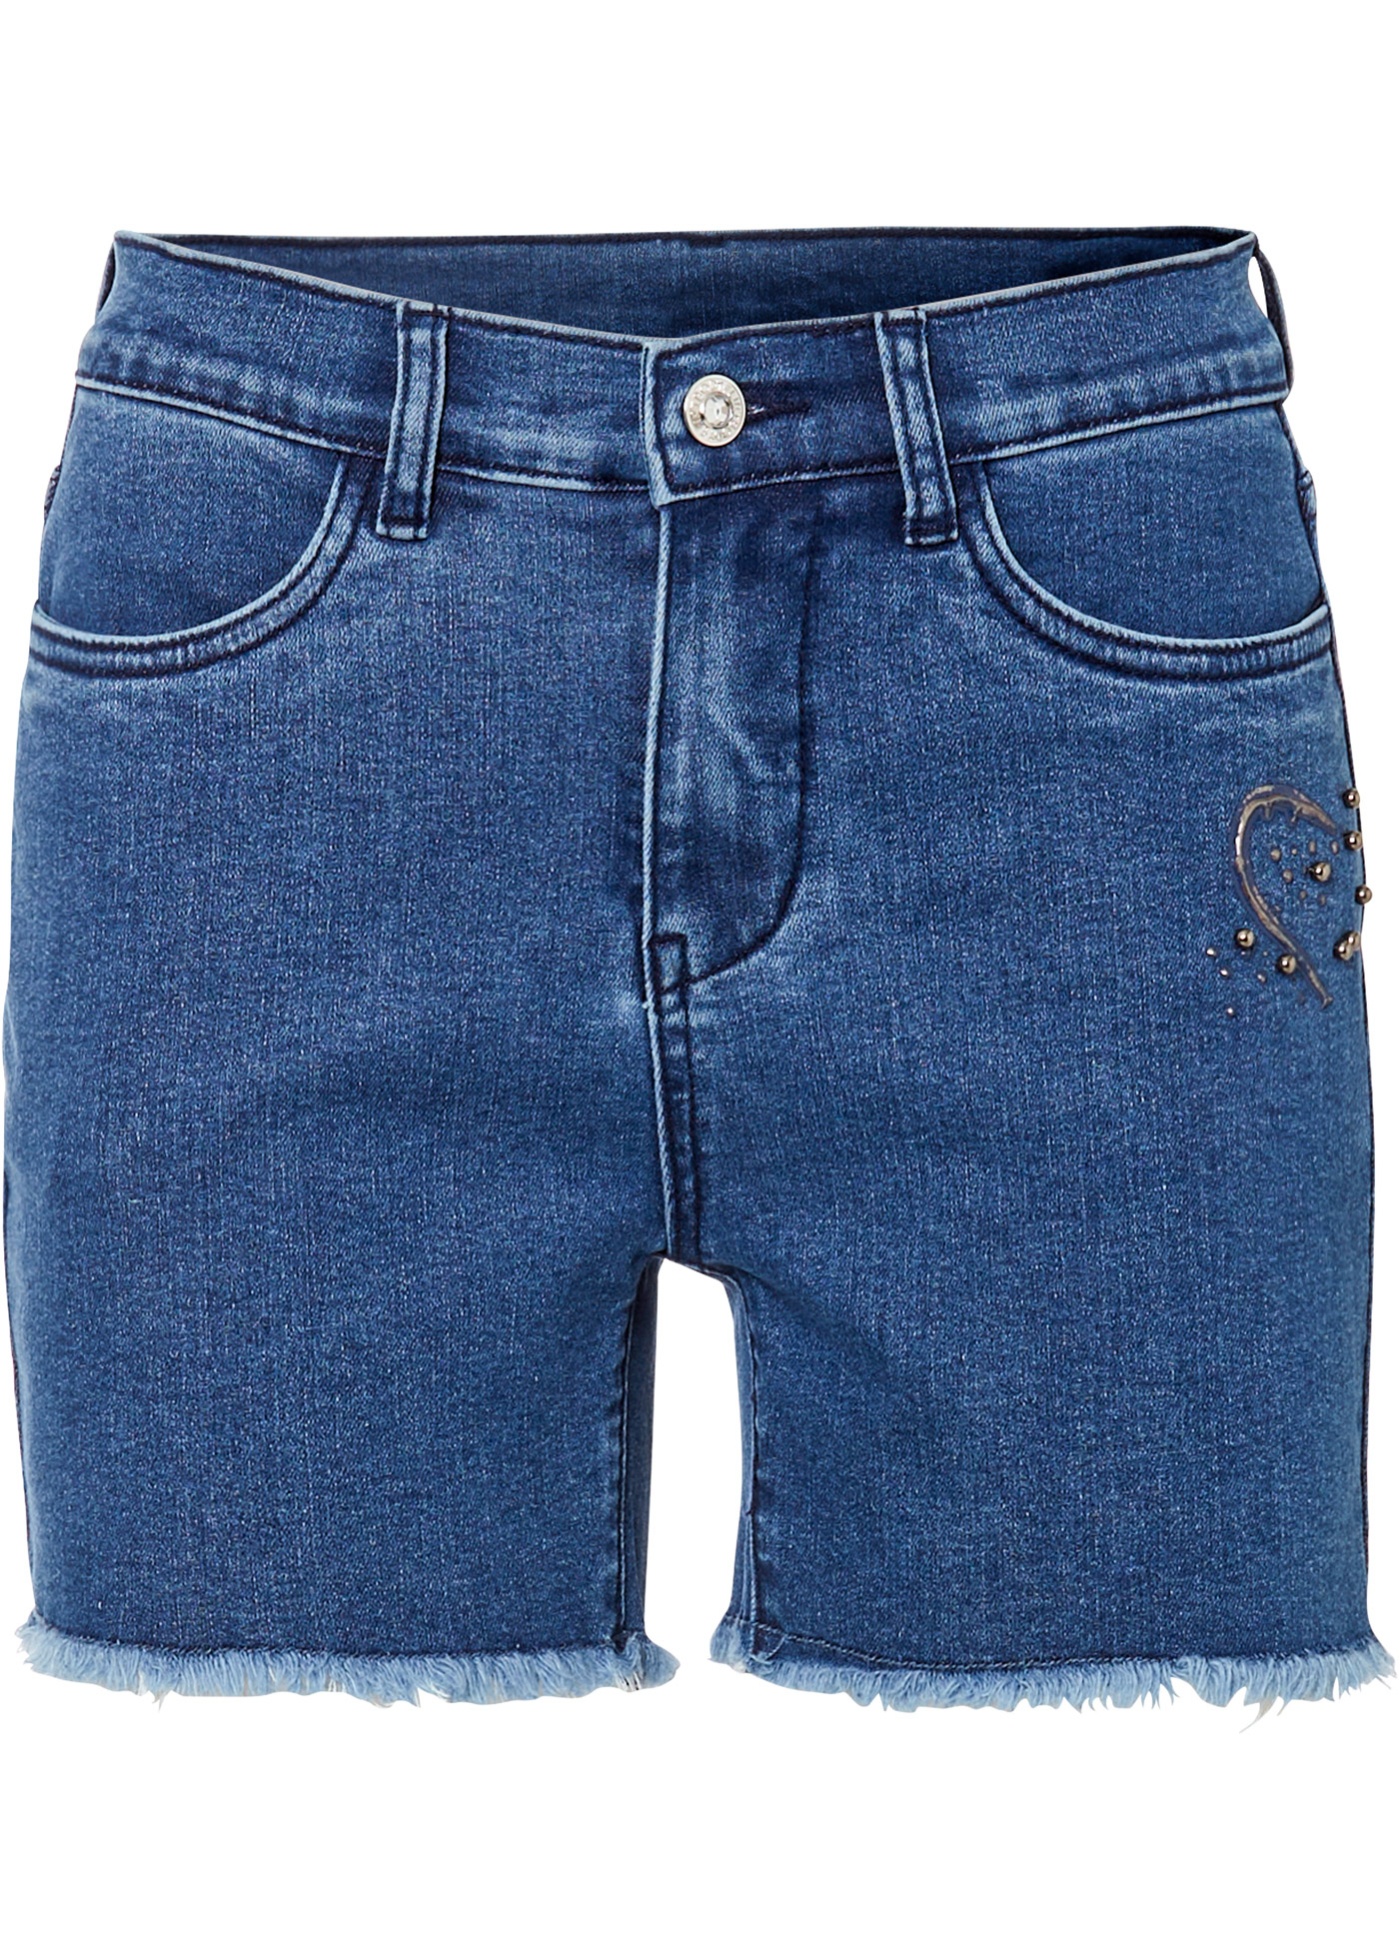 Jeans-Shorts mit Applikation